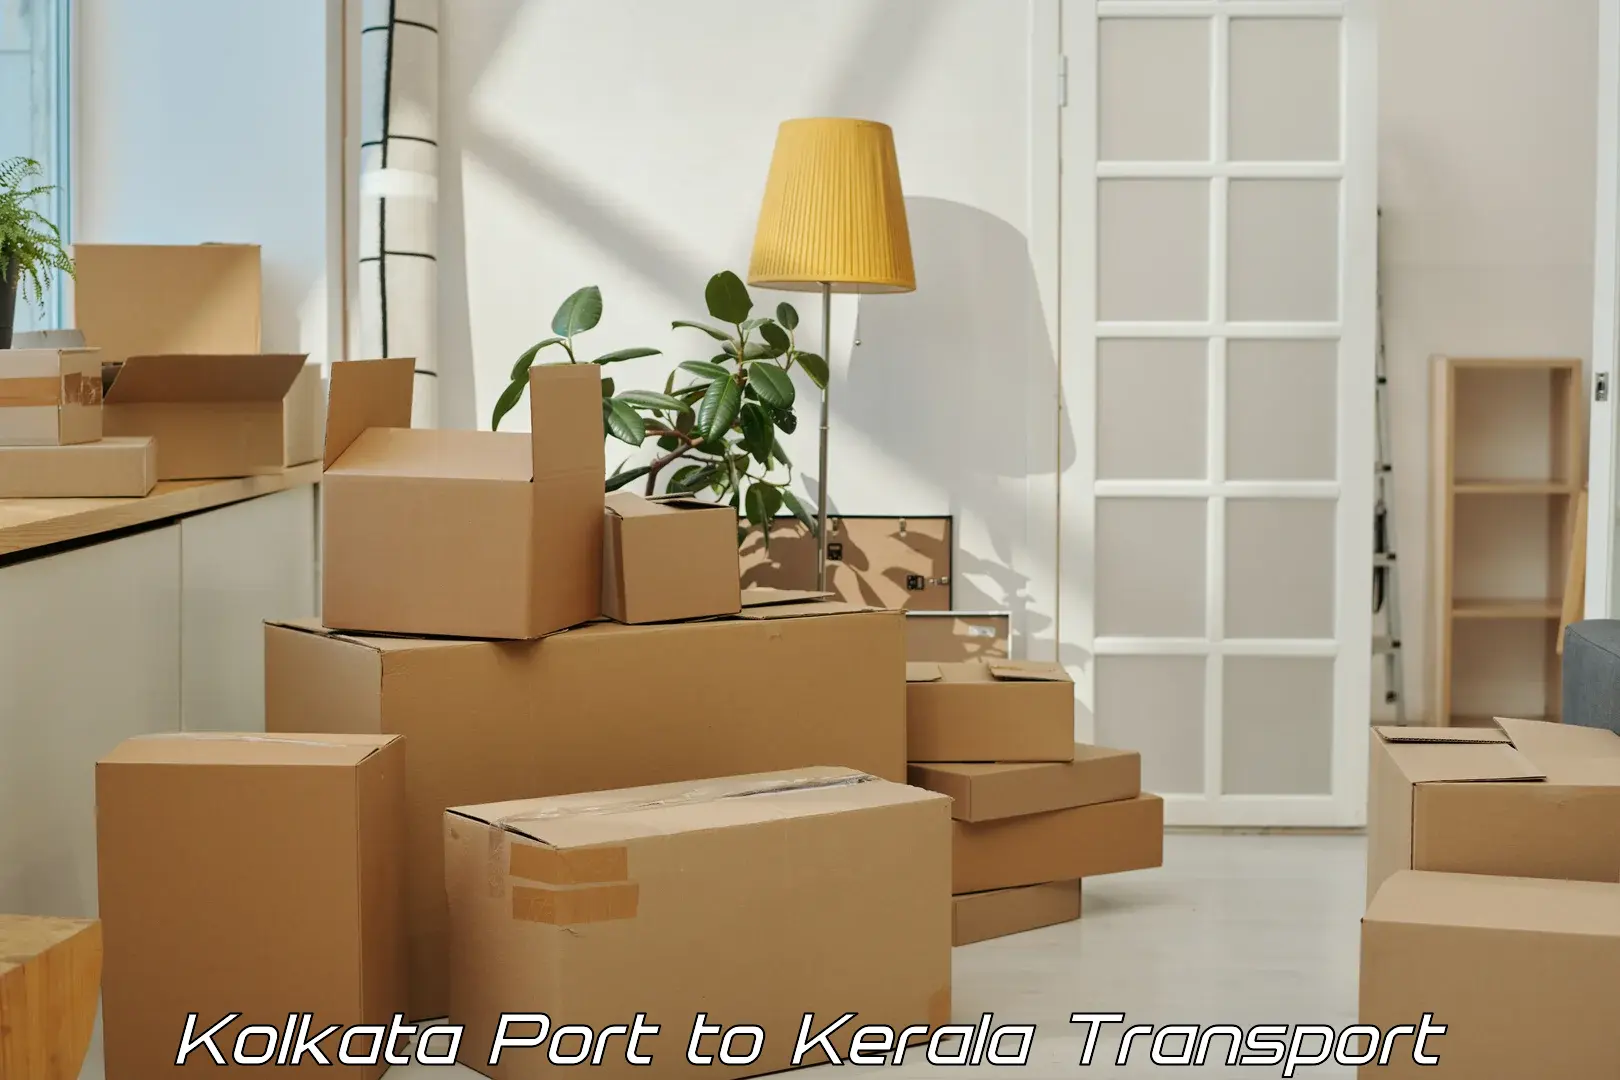 Goods delivery service Kolkata Port to Kerala